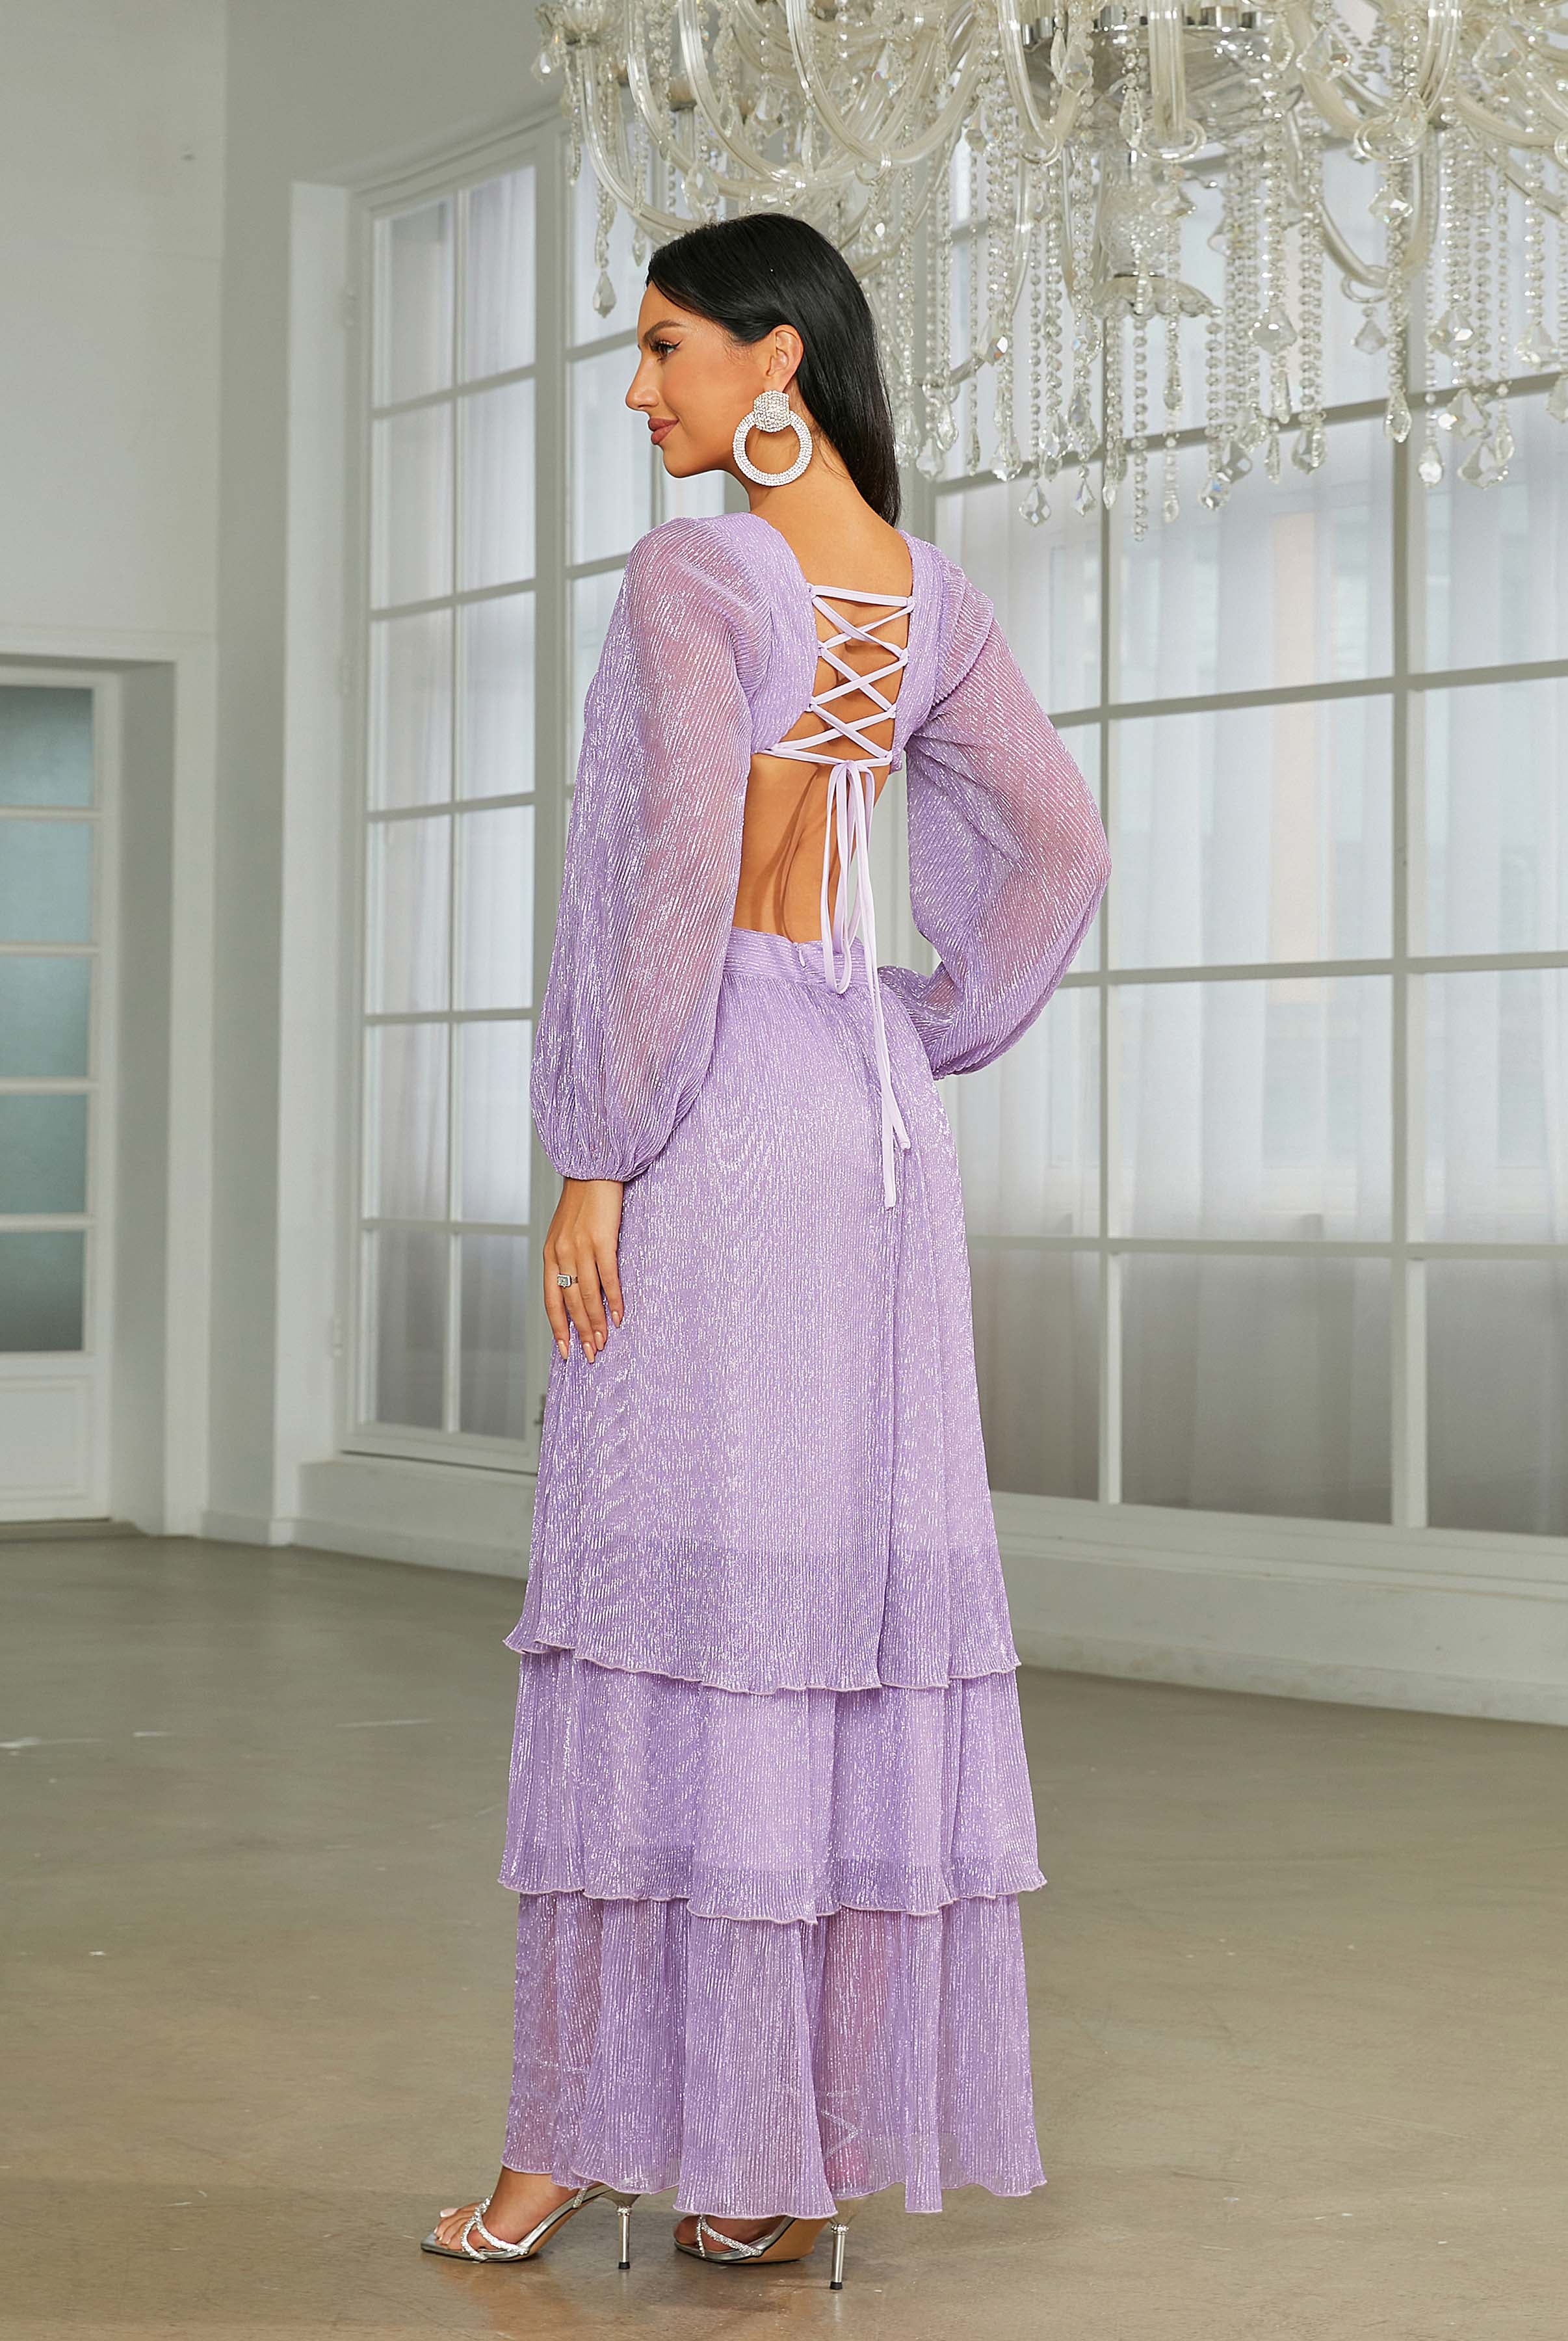 MISSORD V-neck Lantern Sleeve Backless Purple Prom Dress